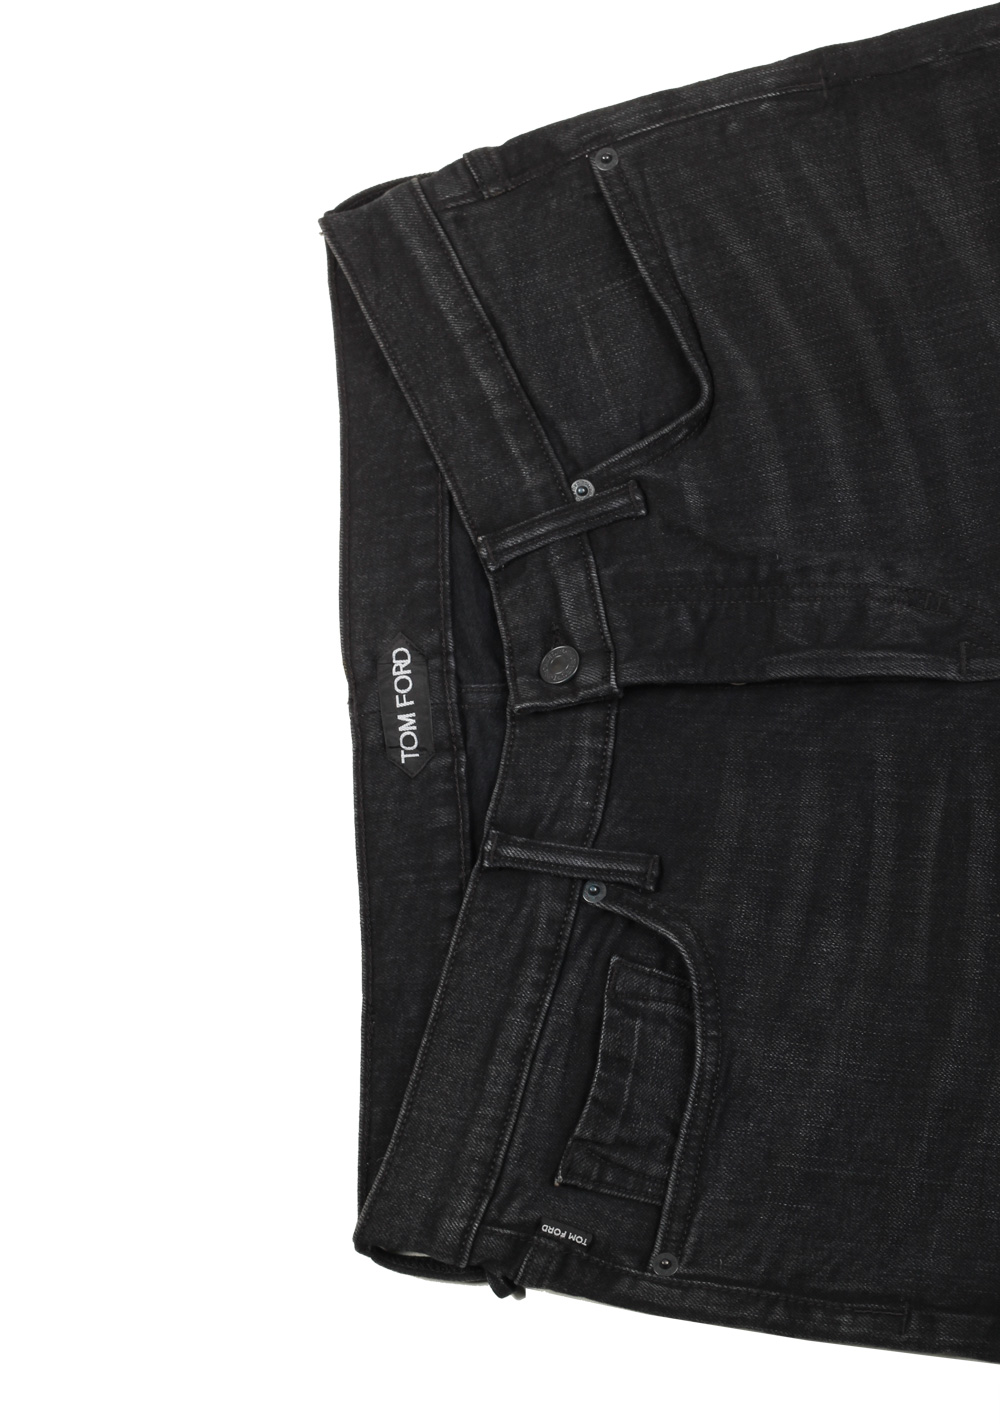 TOM FORD Black Slim Fit Jeans TFD001 | Costume Limité